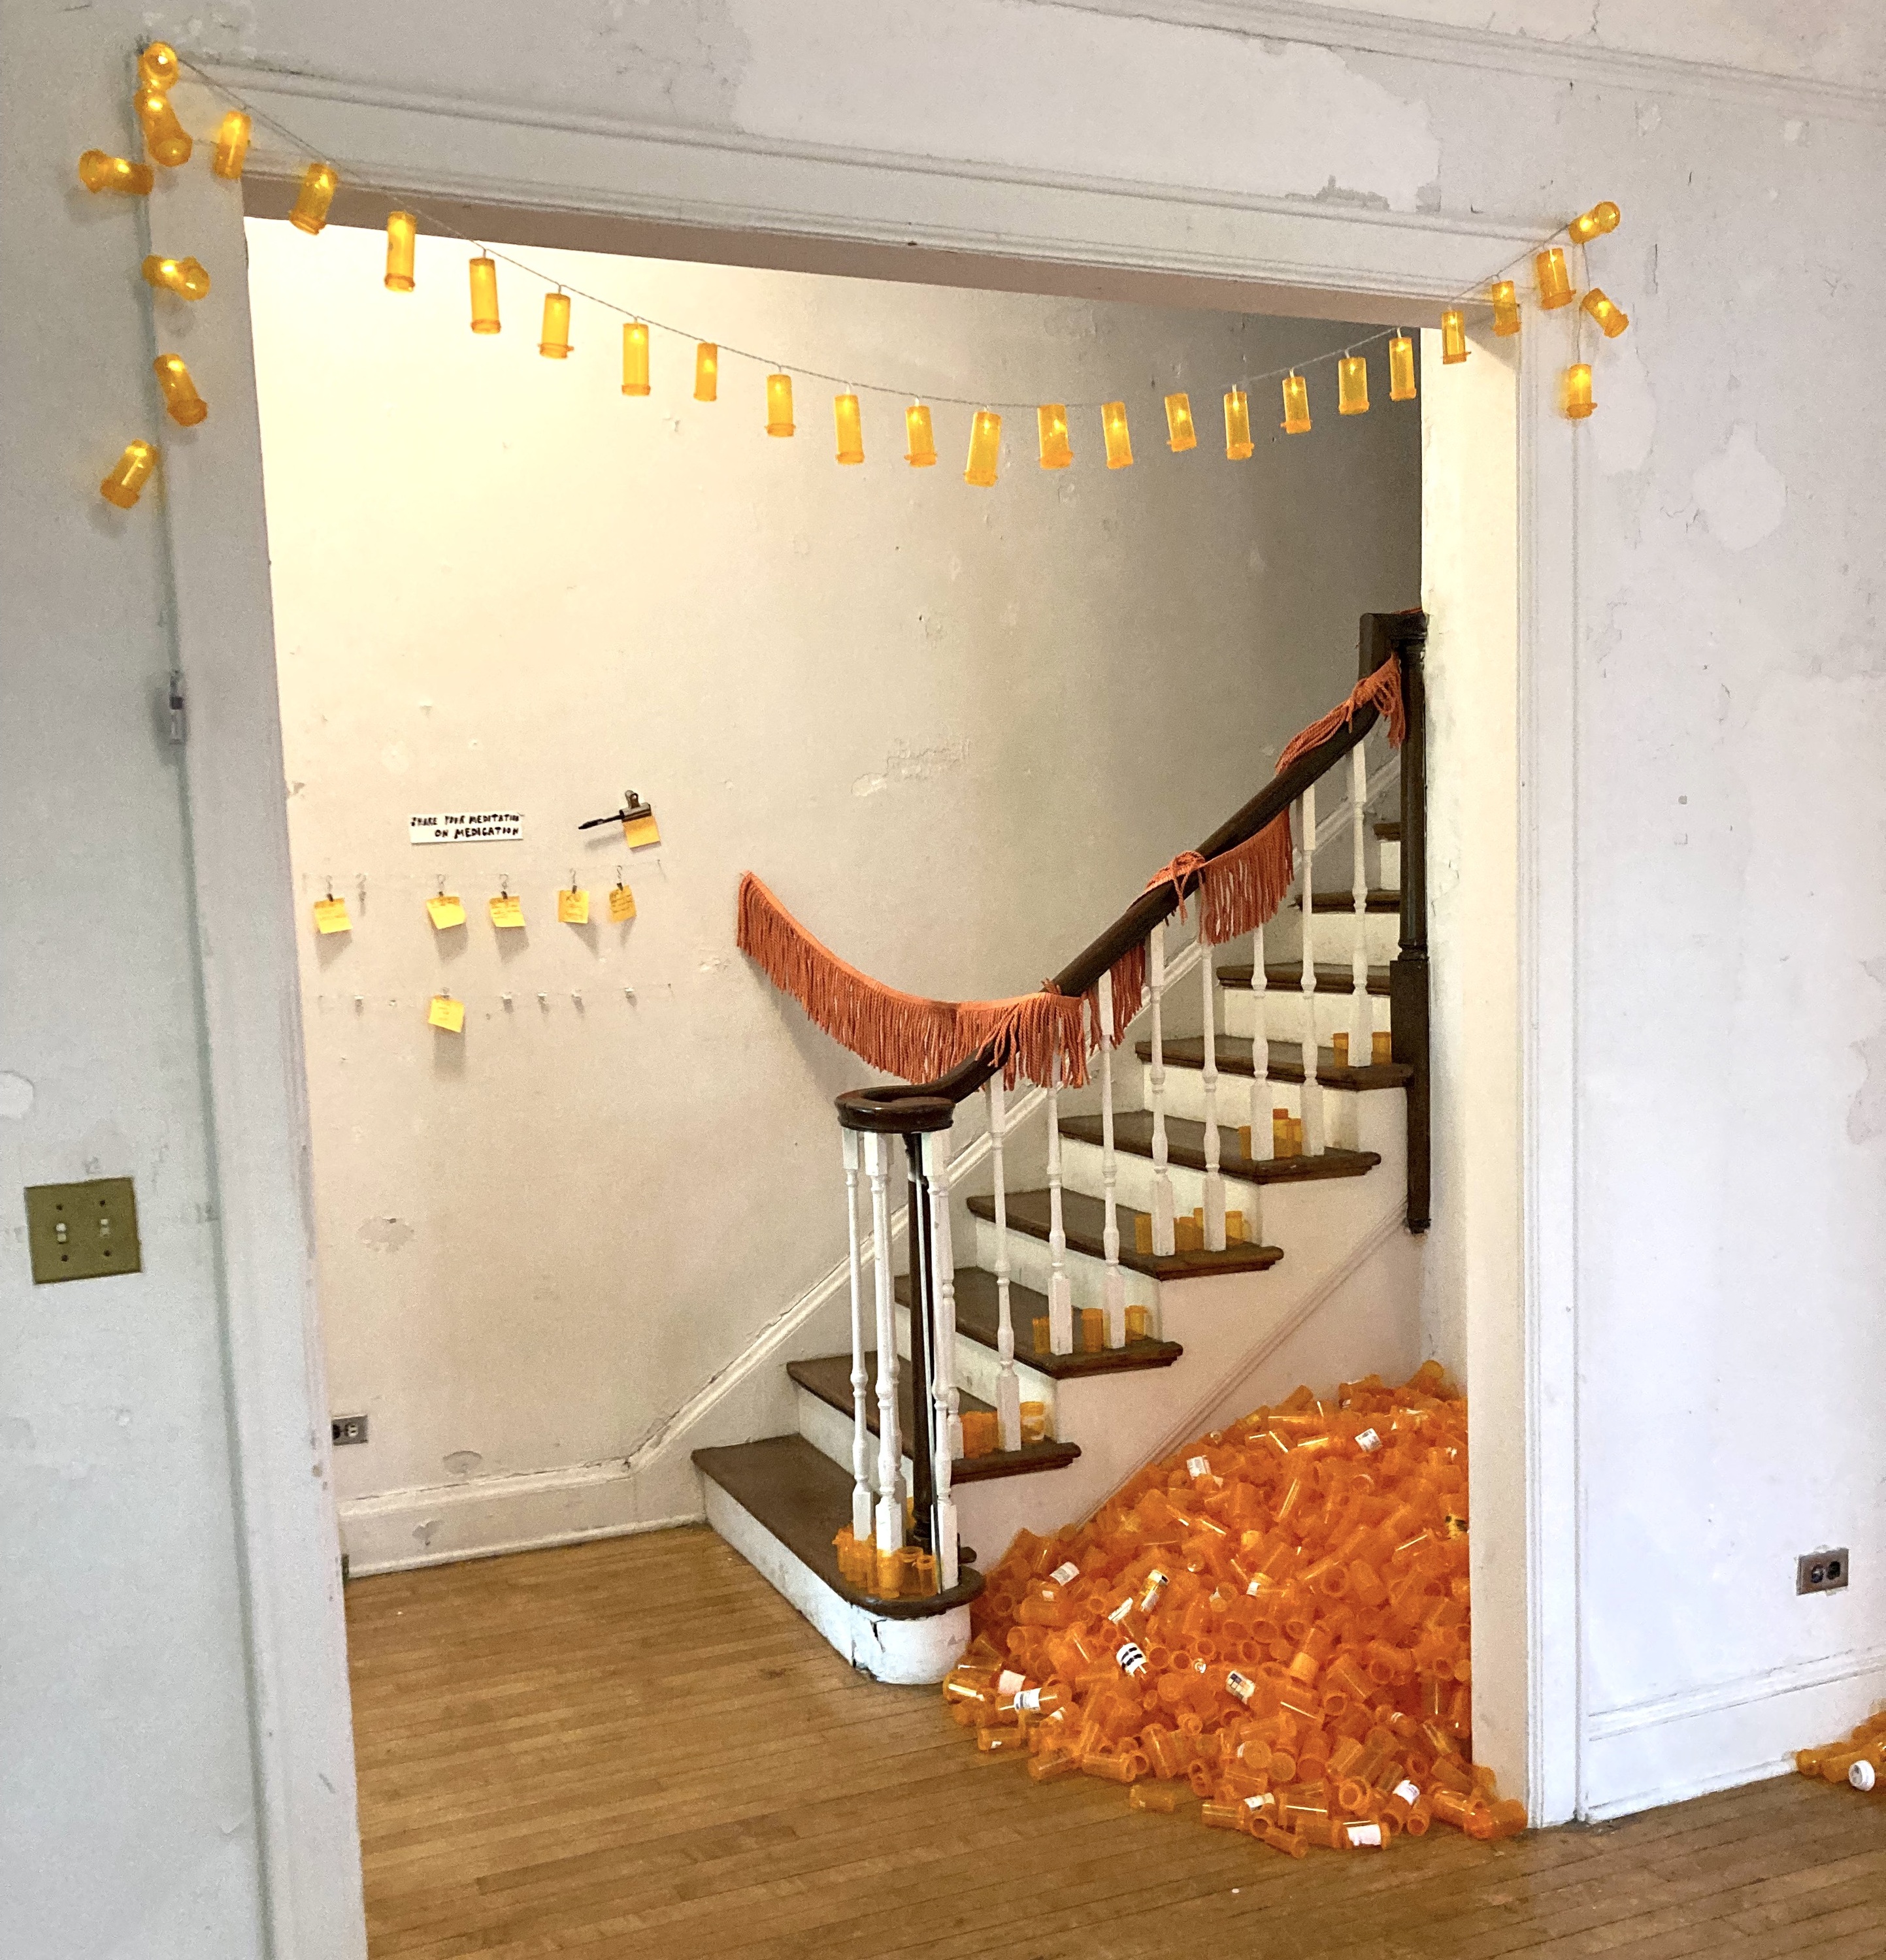 An art installation with orange plastic bottles.